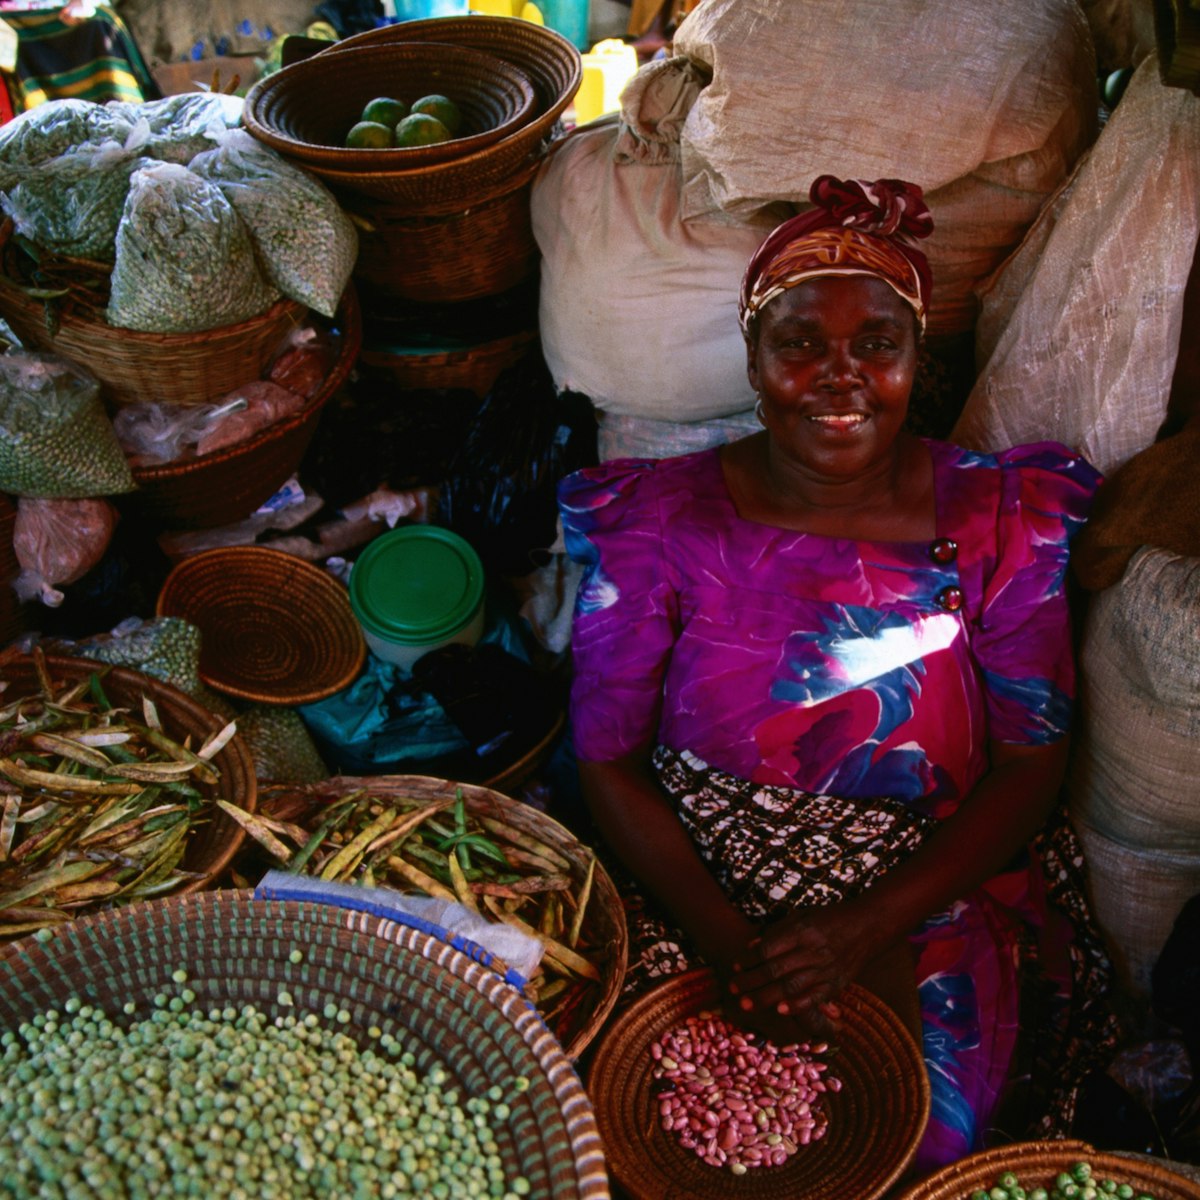 Bean vendor at Nakasero Market.